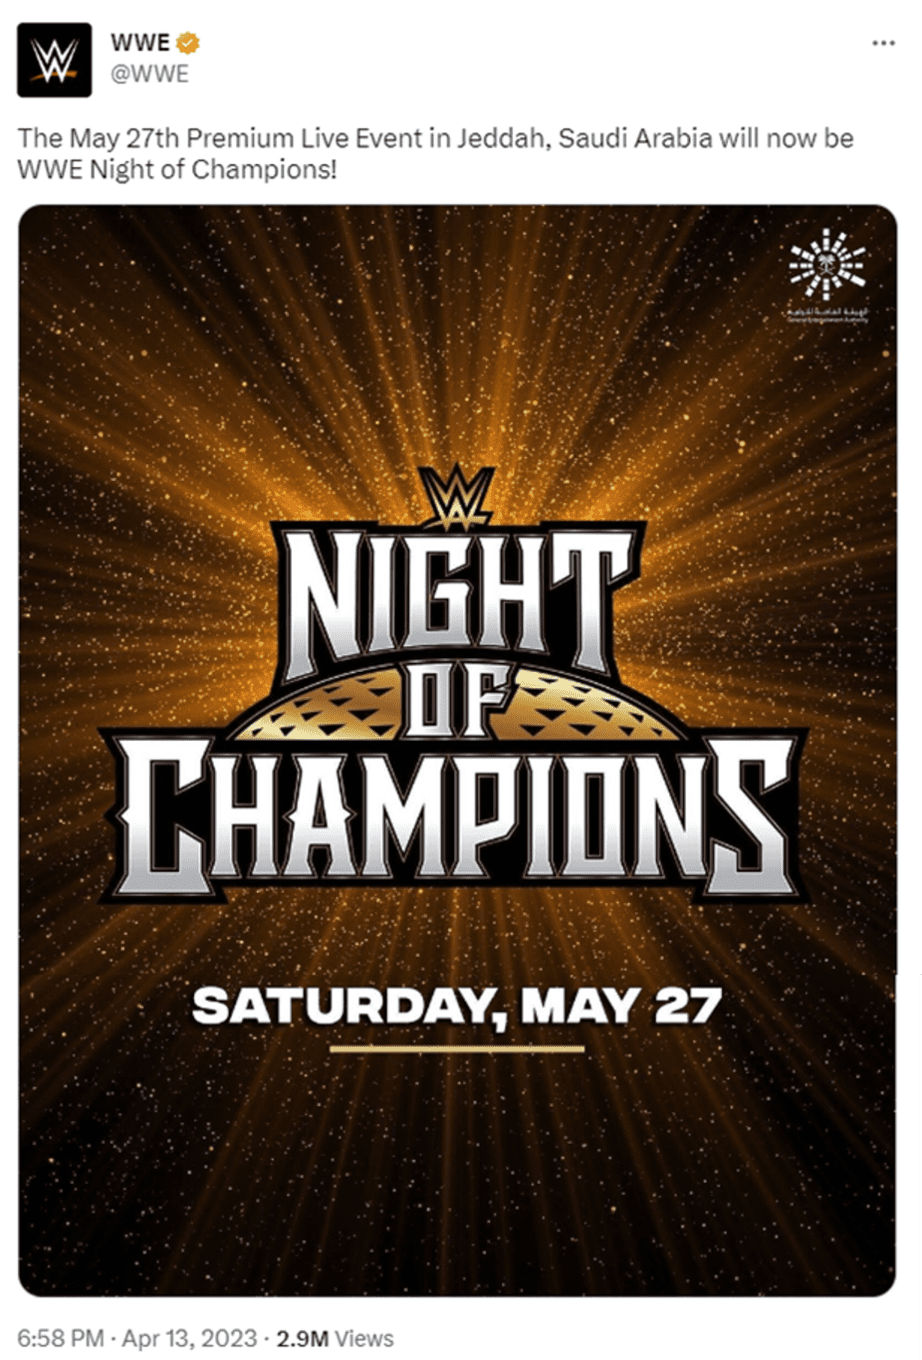 WWE Night of Champions 2023 Saudia Arabia announcement